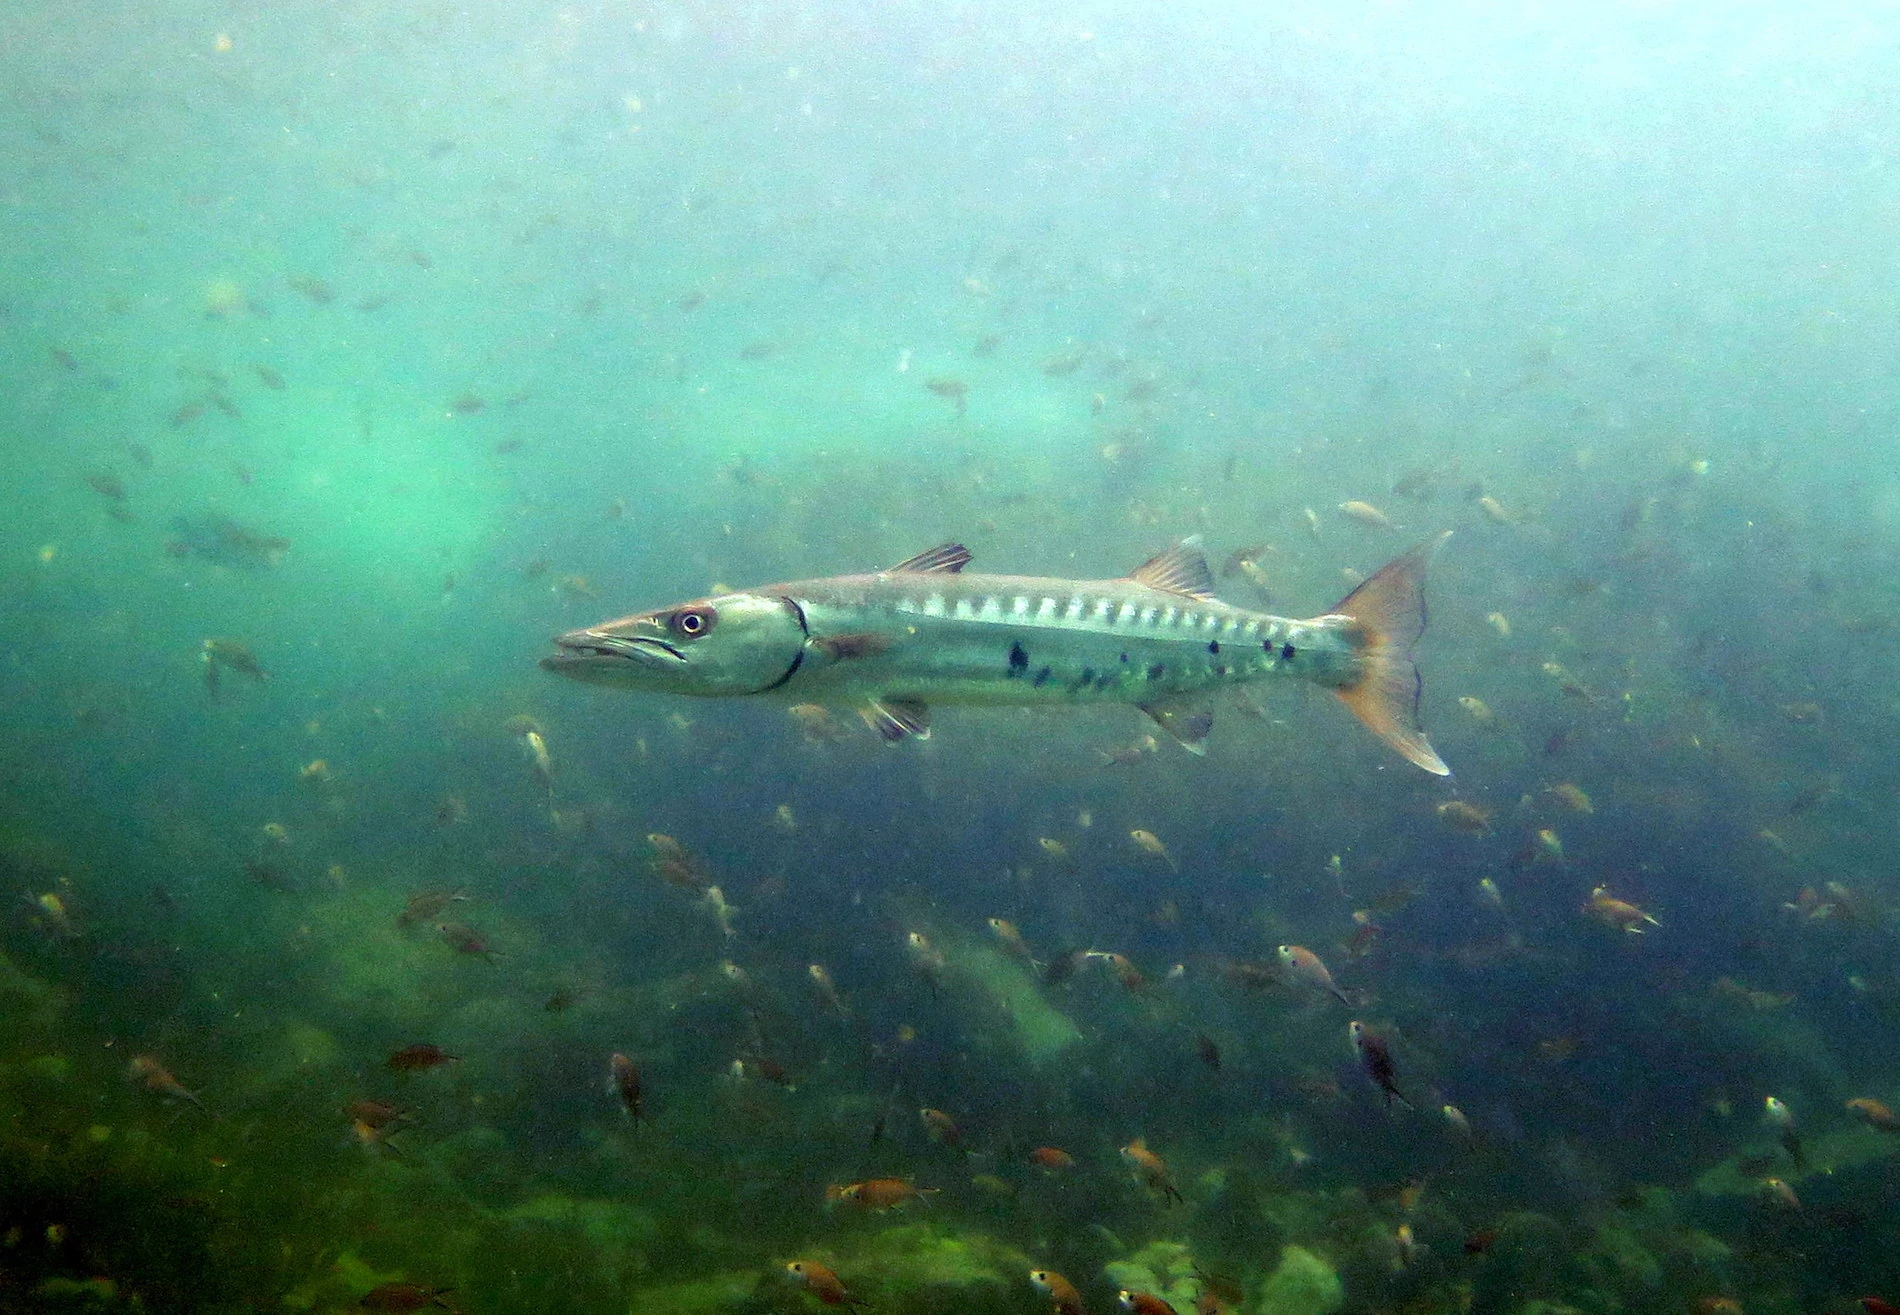 atmospheric shot of a barracuda